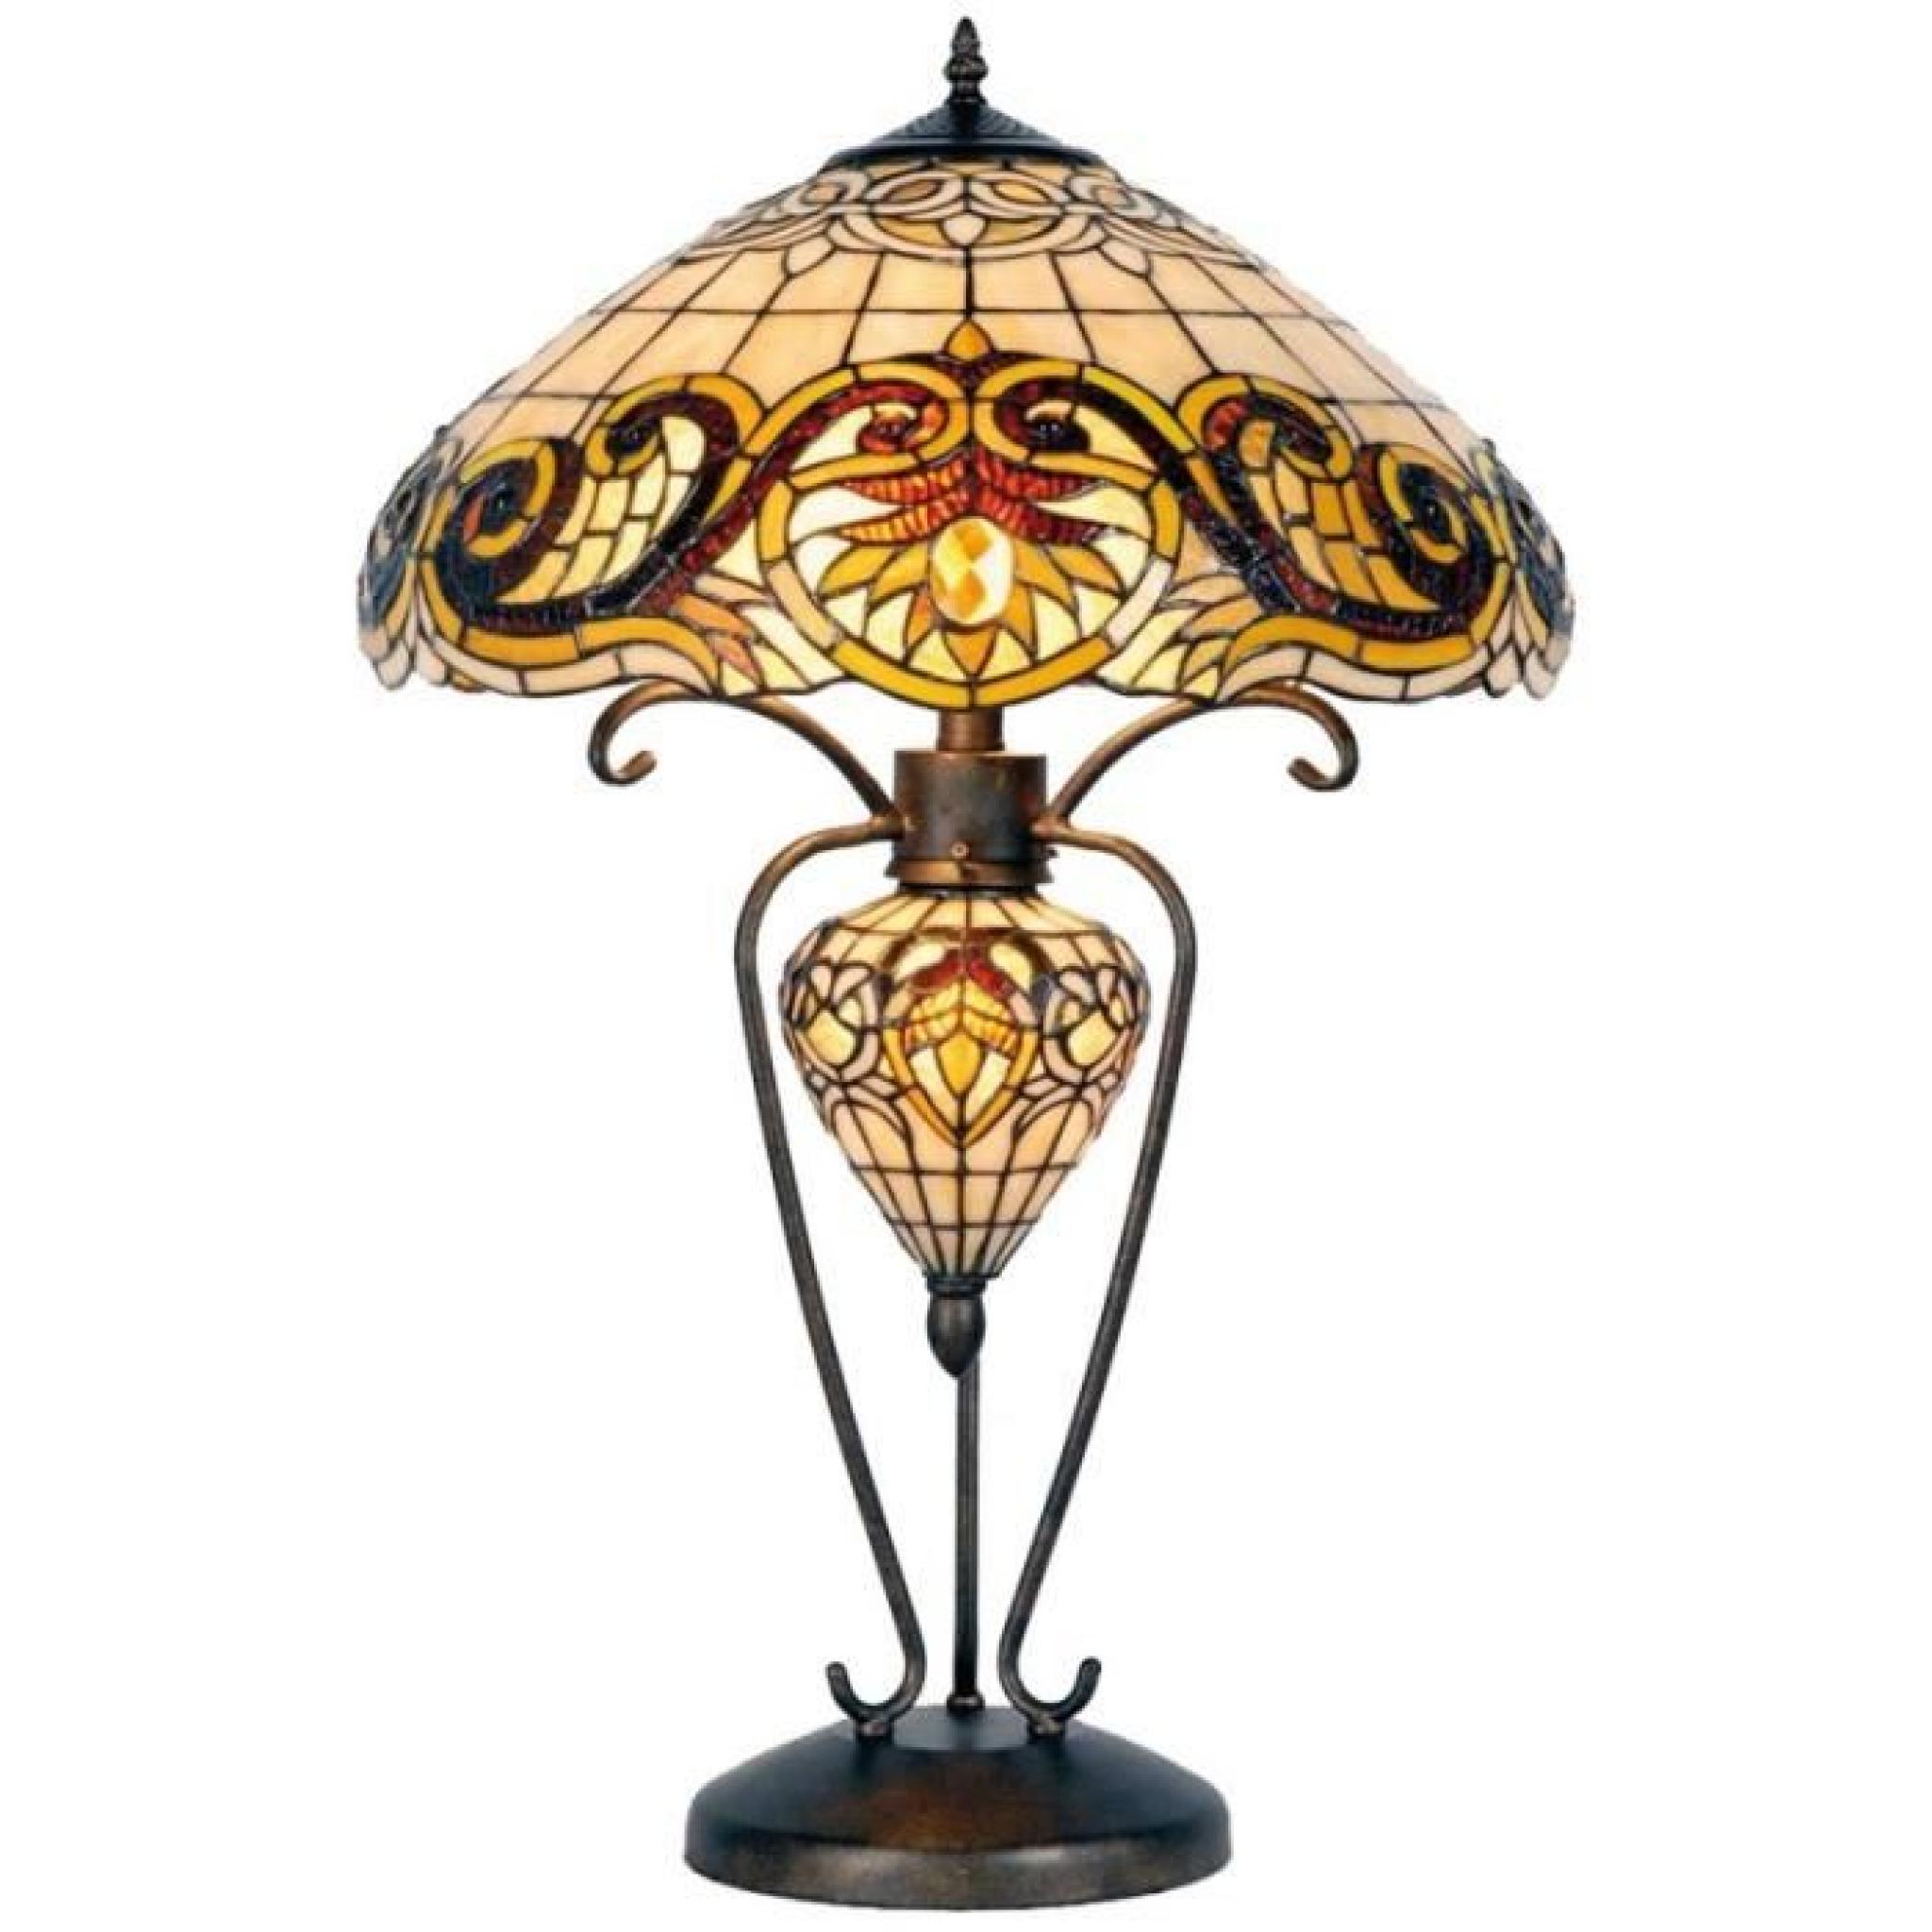 Lampe style Tiffany lampe de table pied vitraux verre metal